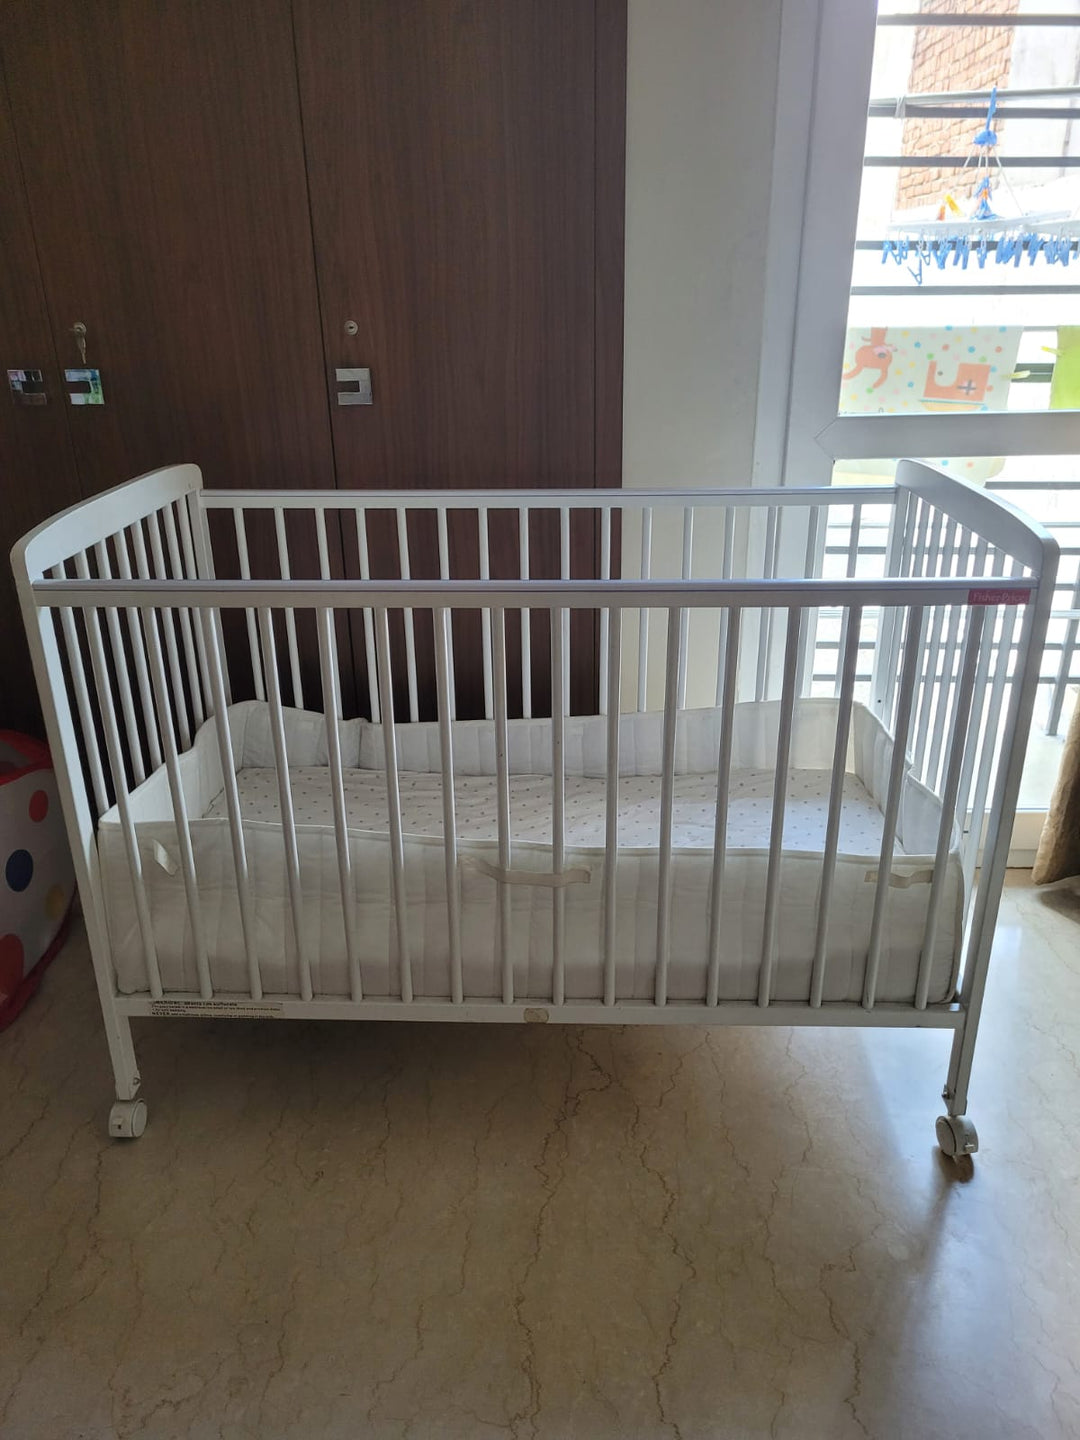 Fisher-Price Joy Baby Wooden Crib With mattress